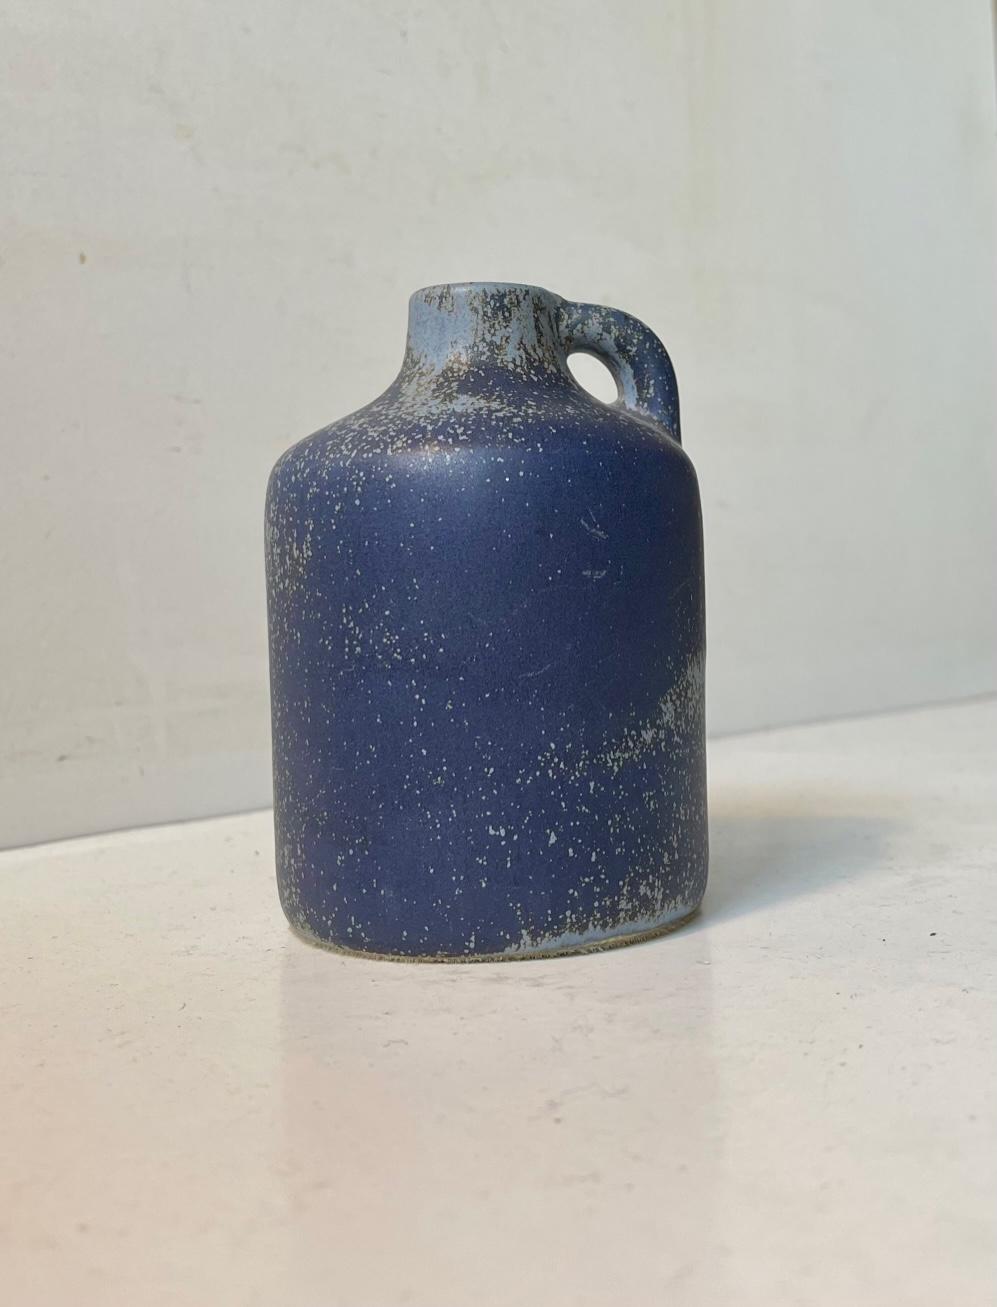 Scandinavian Modern Swedish Midcentury Stoneware Vase with Speckled Blue Glaze, 1960s